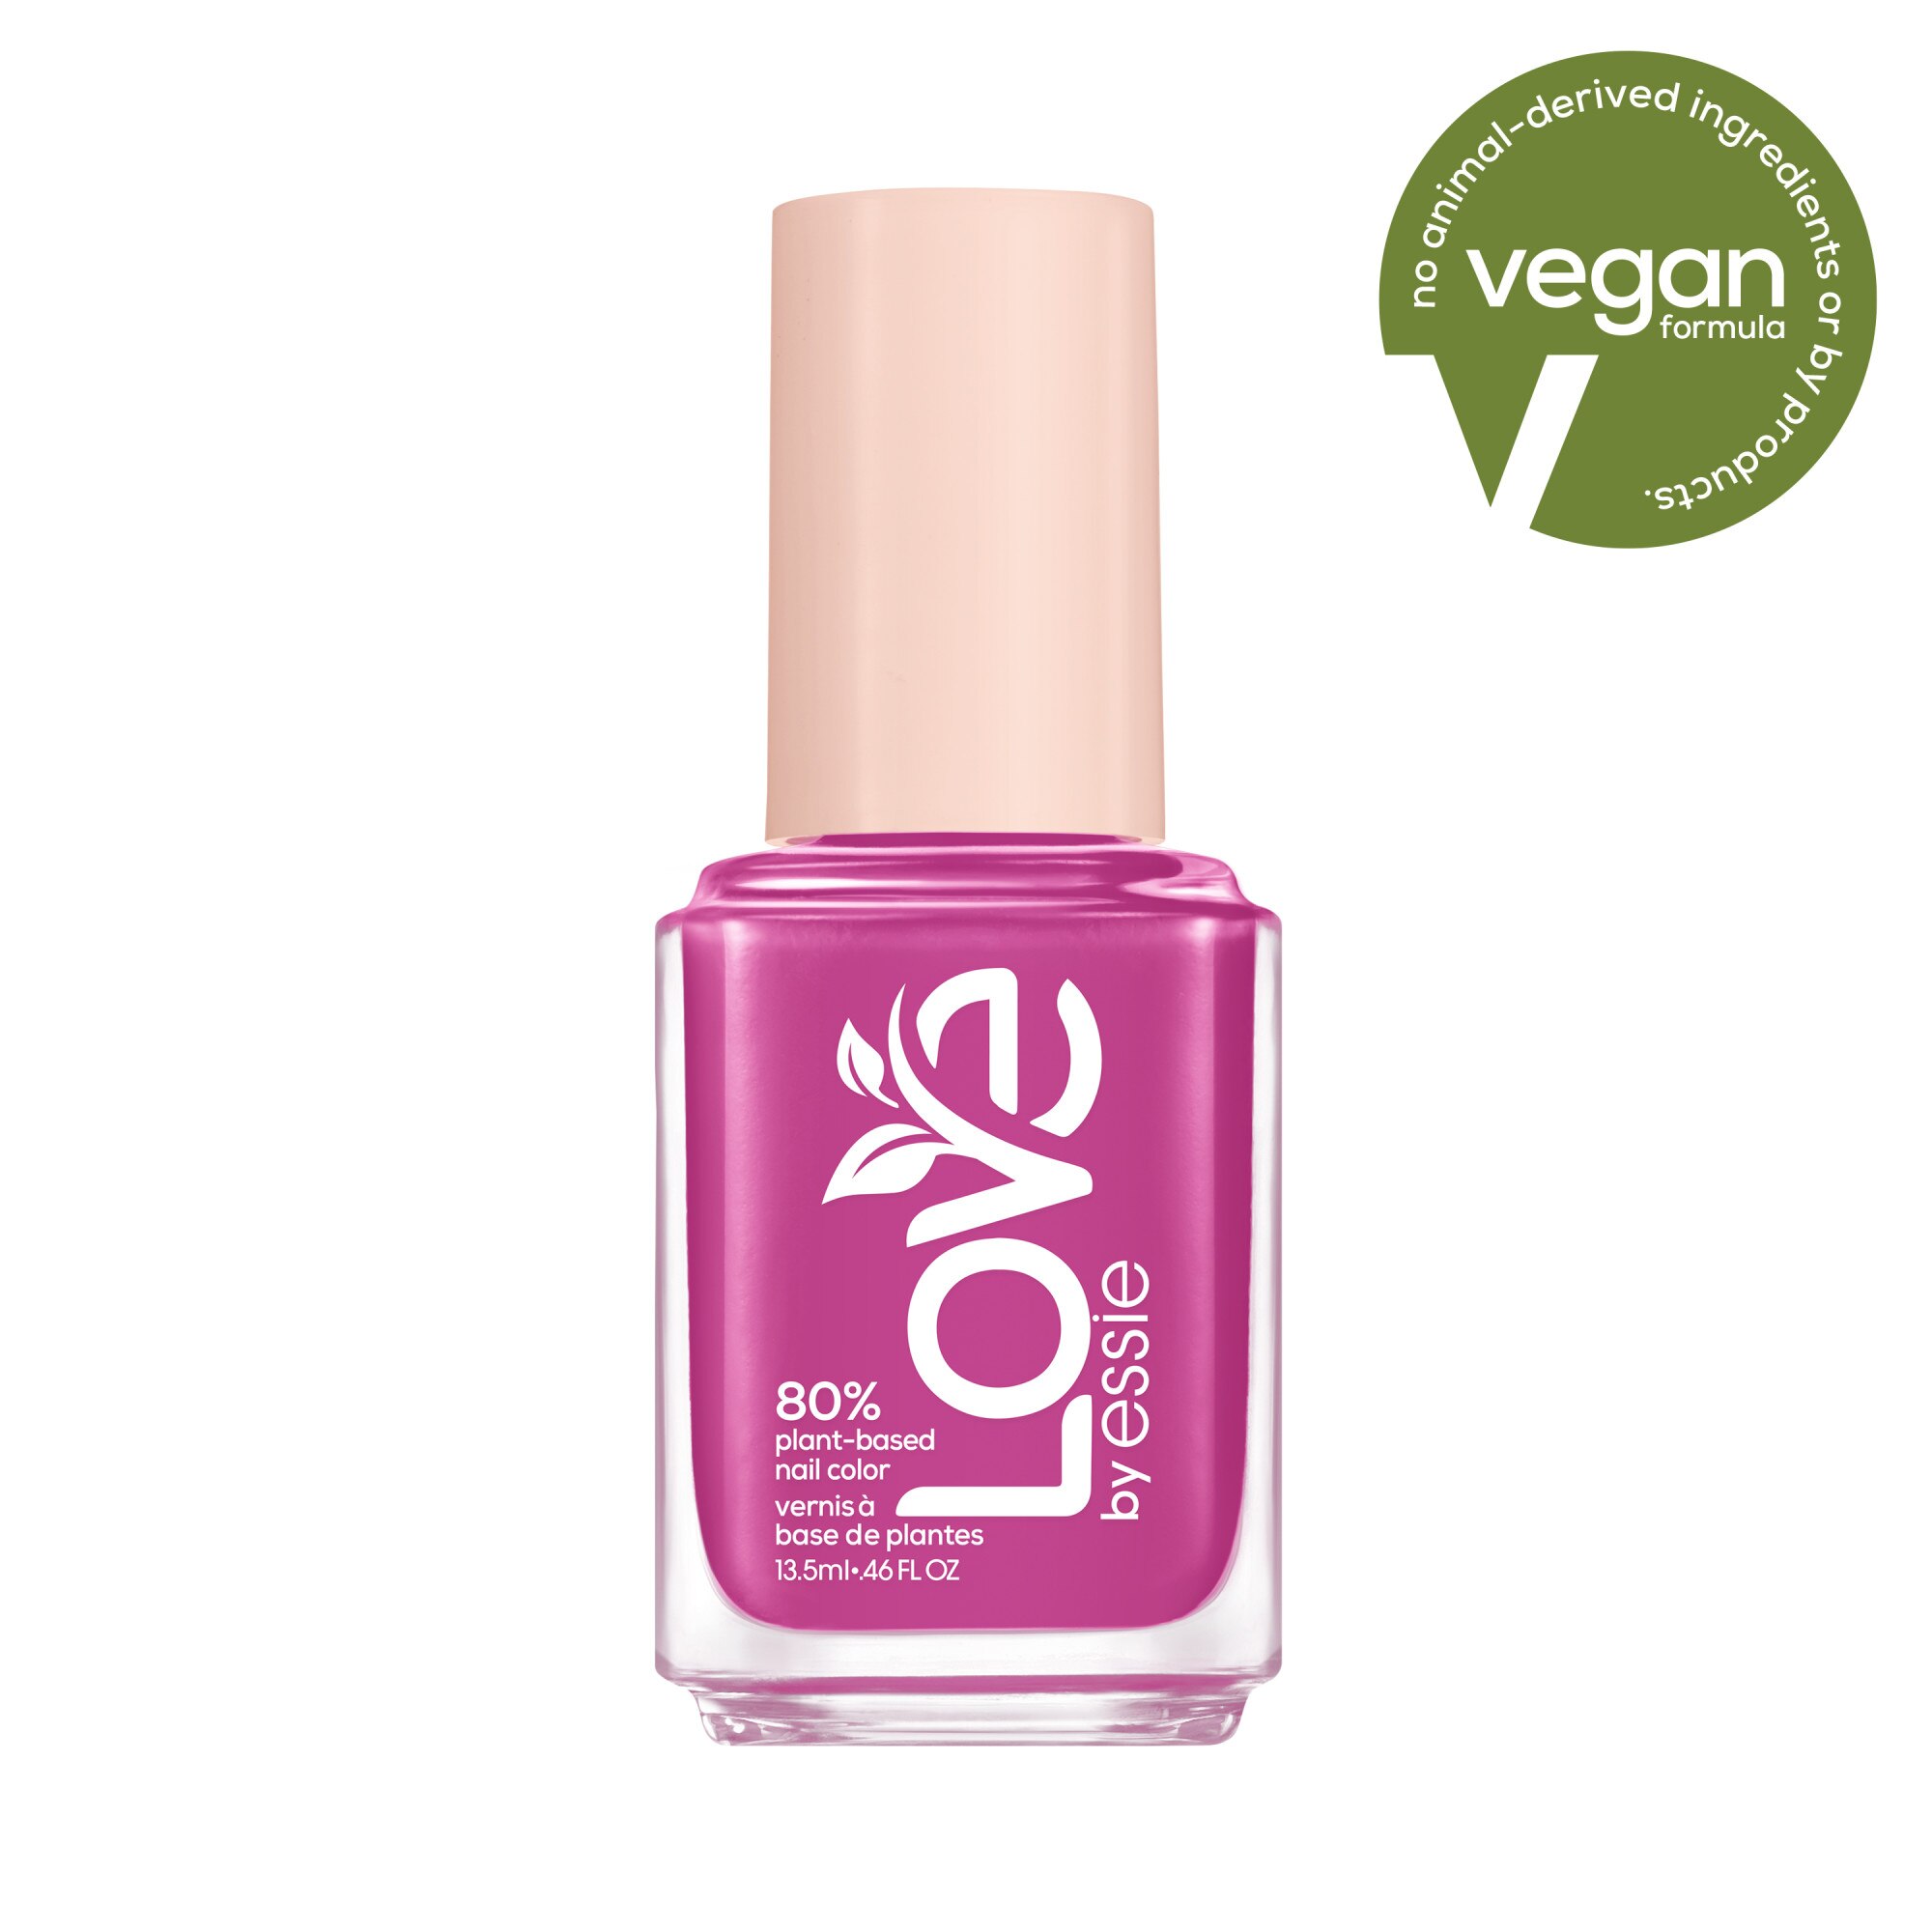 love by essie 80 Percent Plant-Based Nail Polish, Vegan, get it girl (pink), 0.46 fl oz